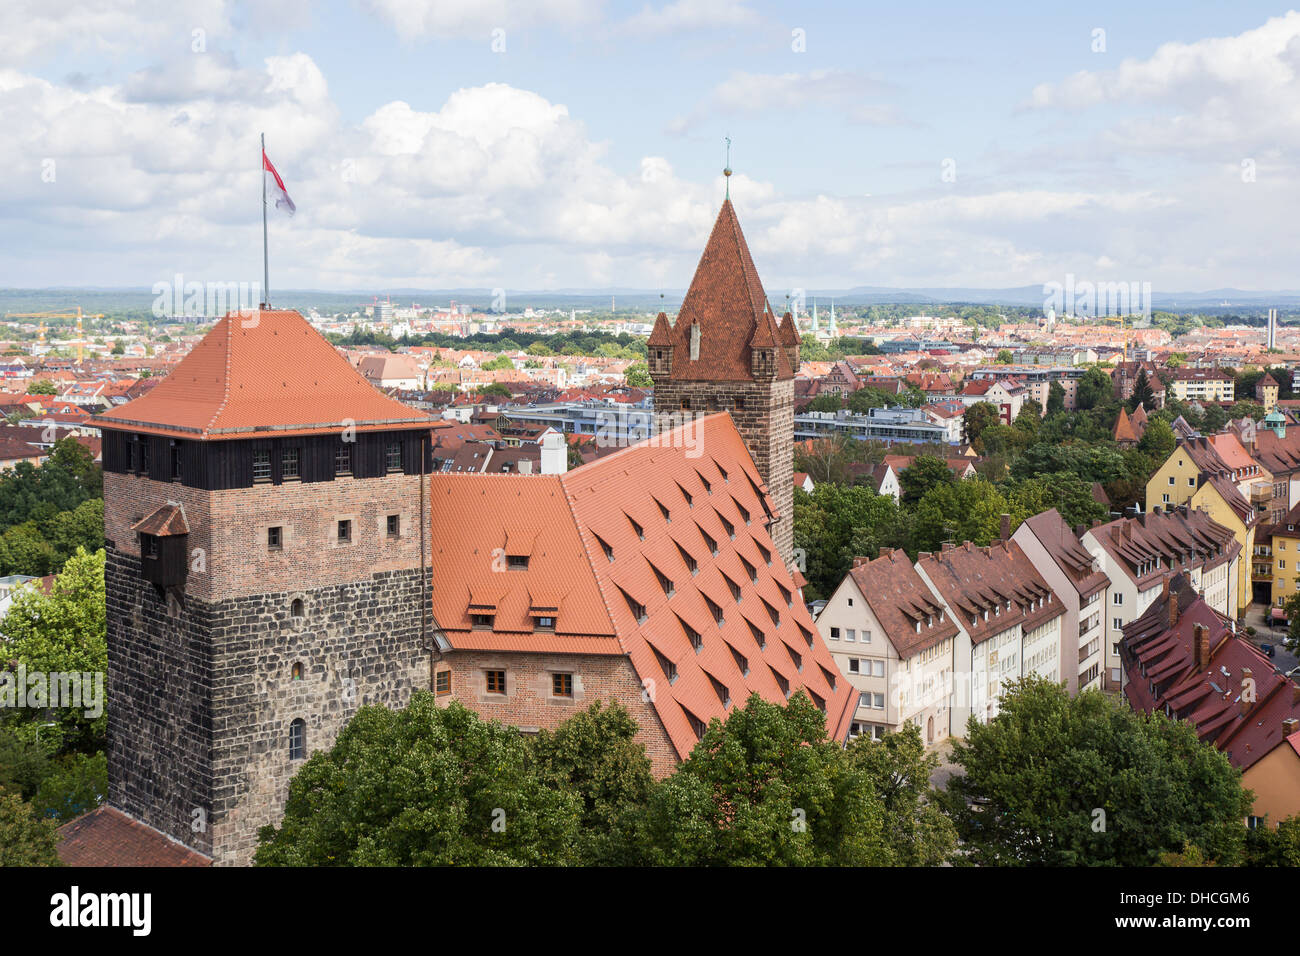 Towers of Kaiserburg or Imperial Castle of Nuremberg, Germany. Stock Photo